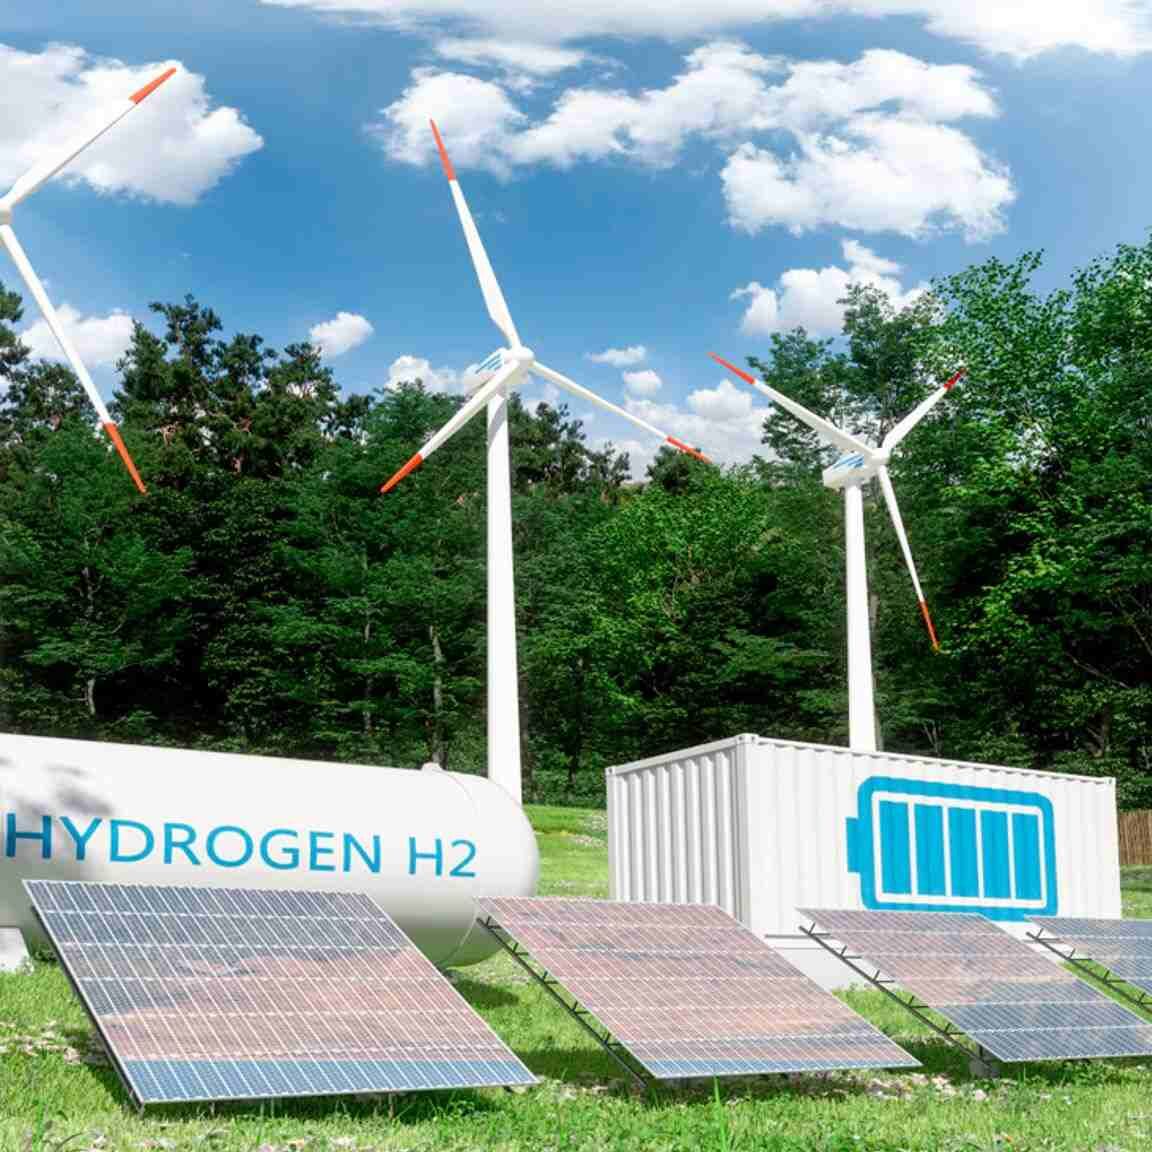 hydrogen-power-equipment-leasing-financing-fairfield-capital